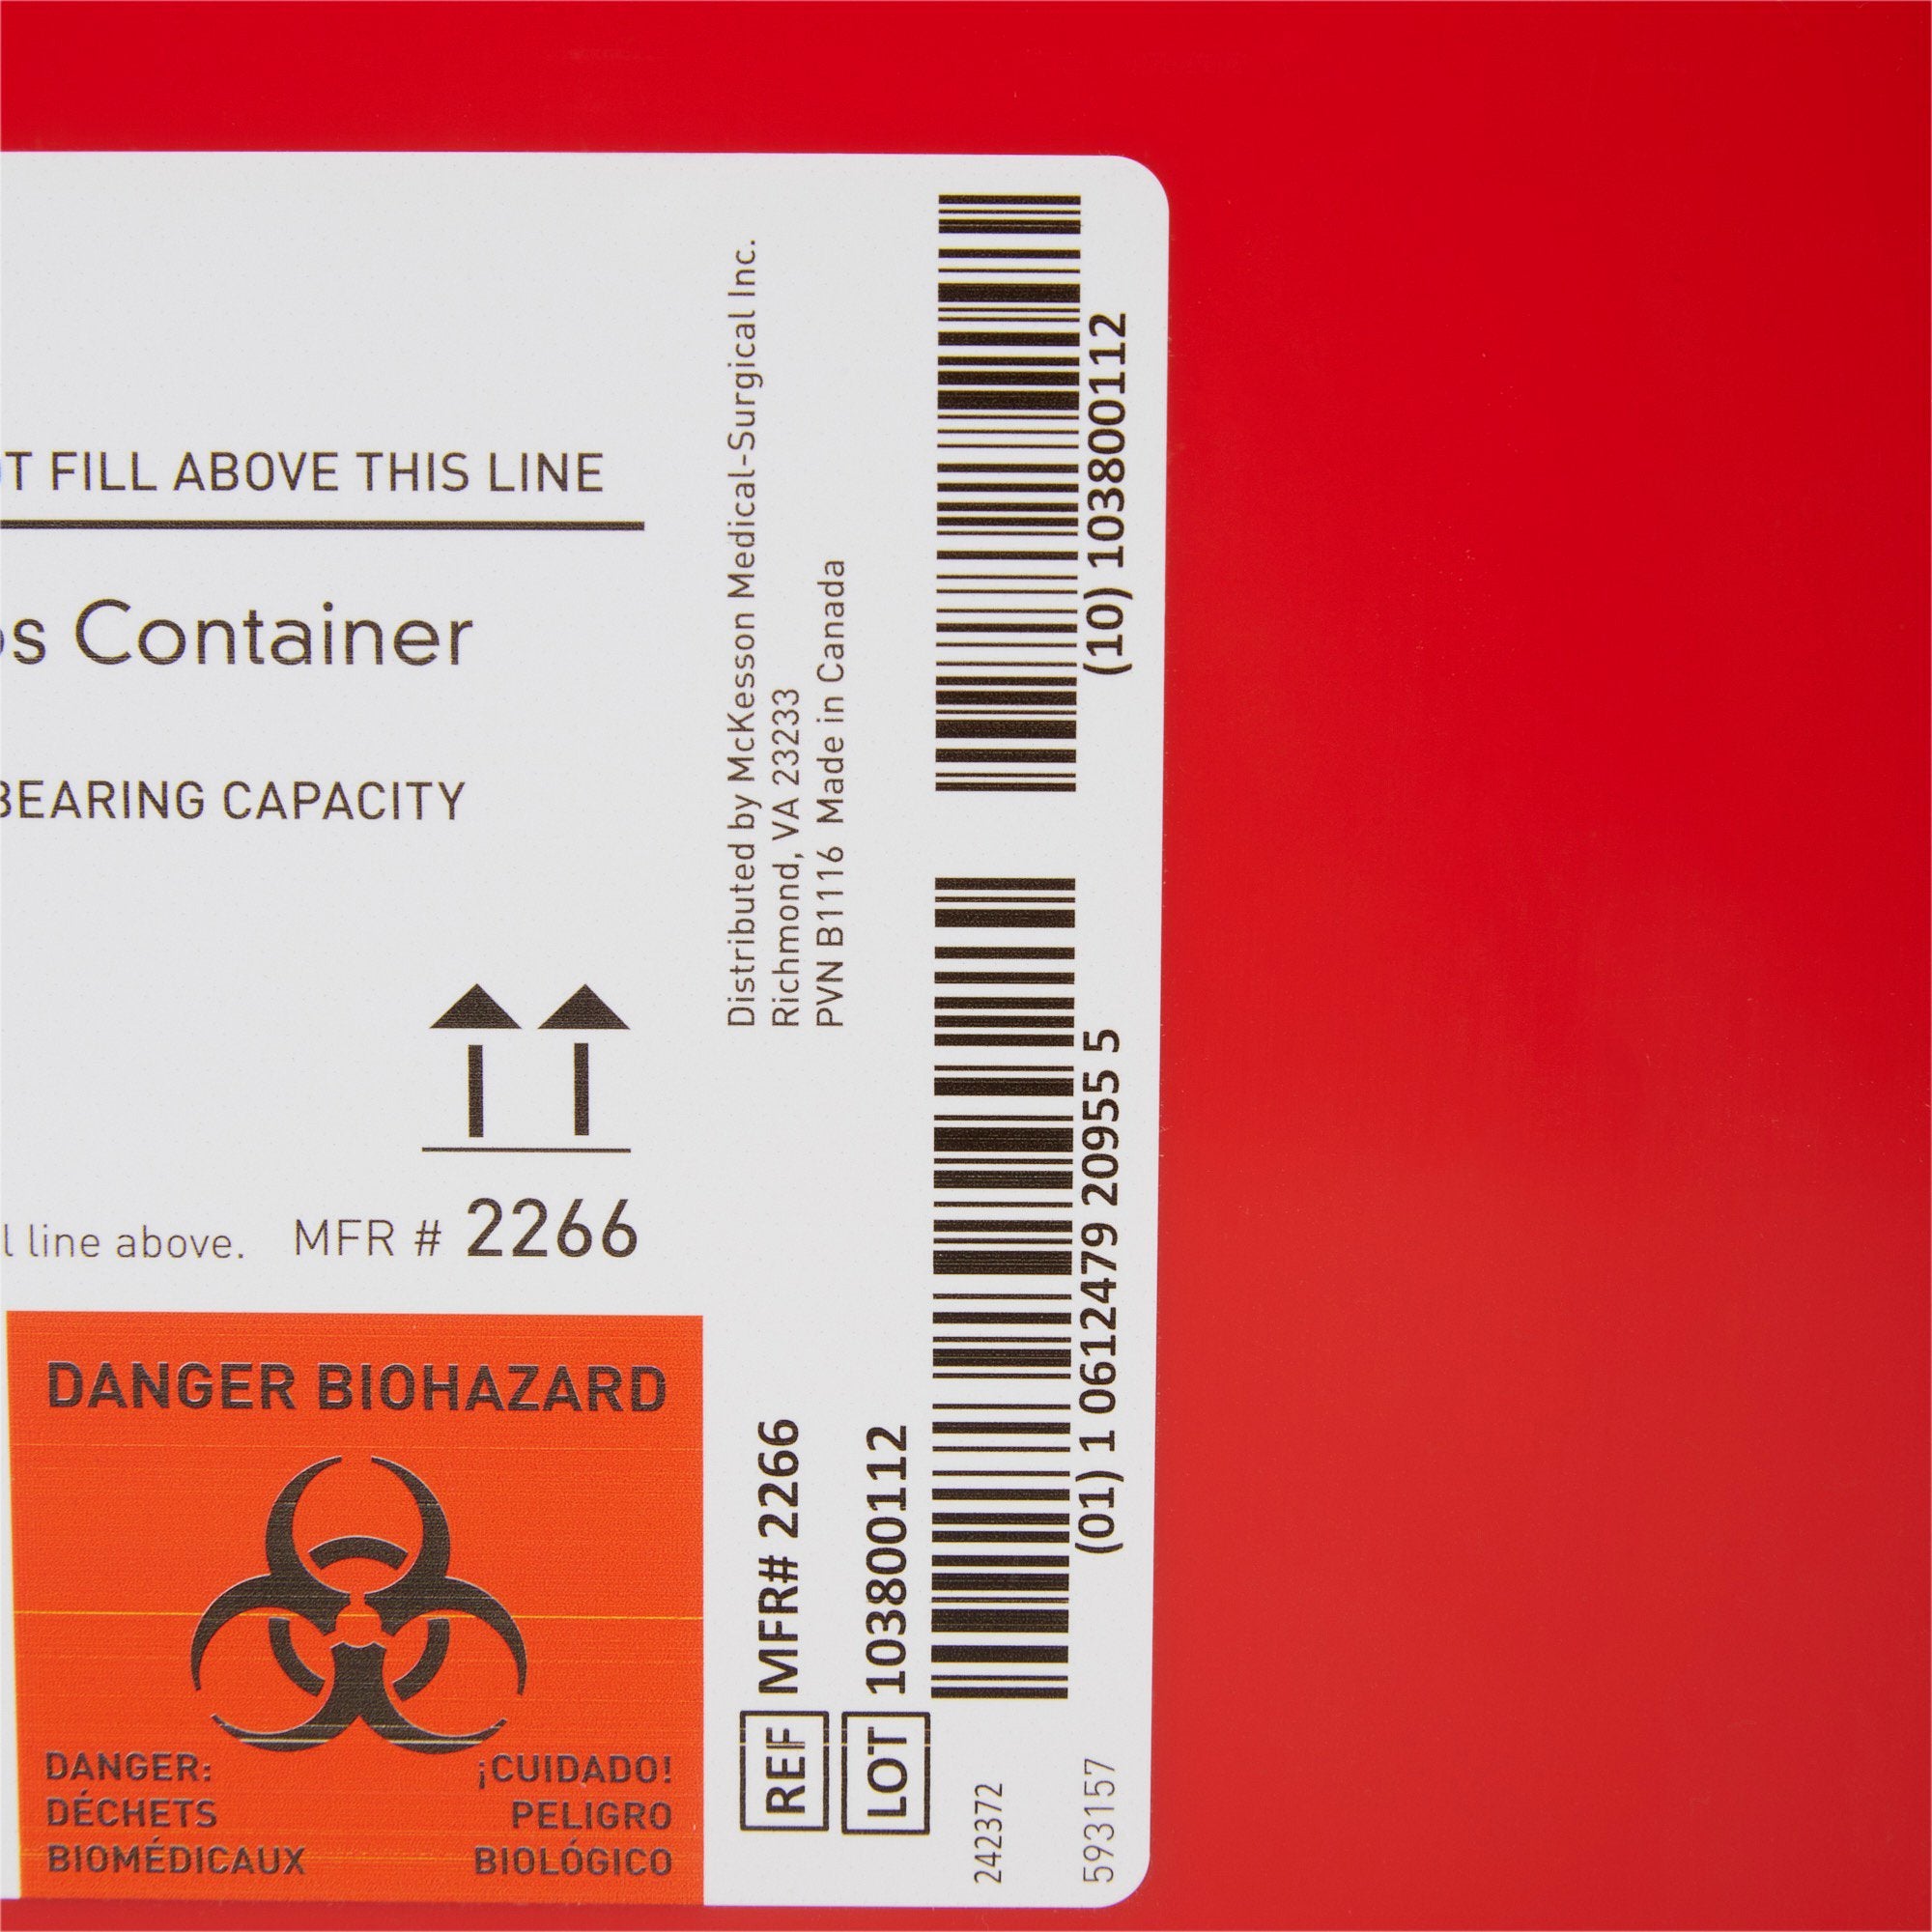 Sharps Container McKesson Prevent® Red Base 13-1/2 H X 17-3/10 W X 13 L Inch Vertical Entry 8 Gallon